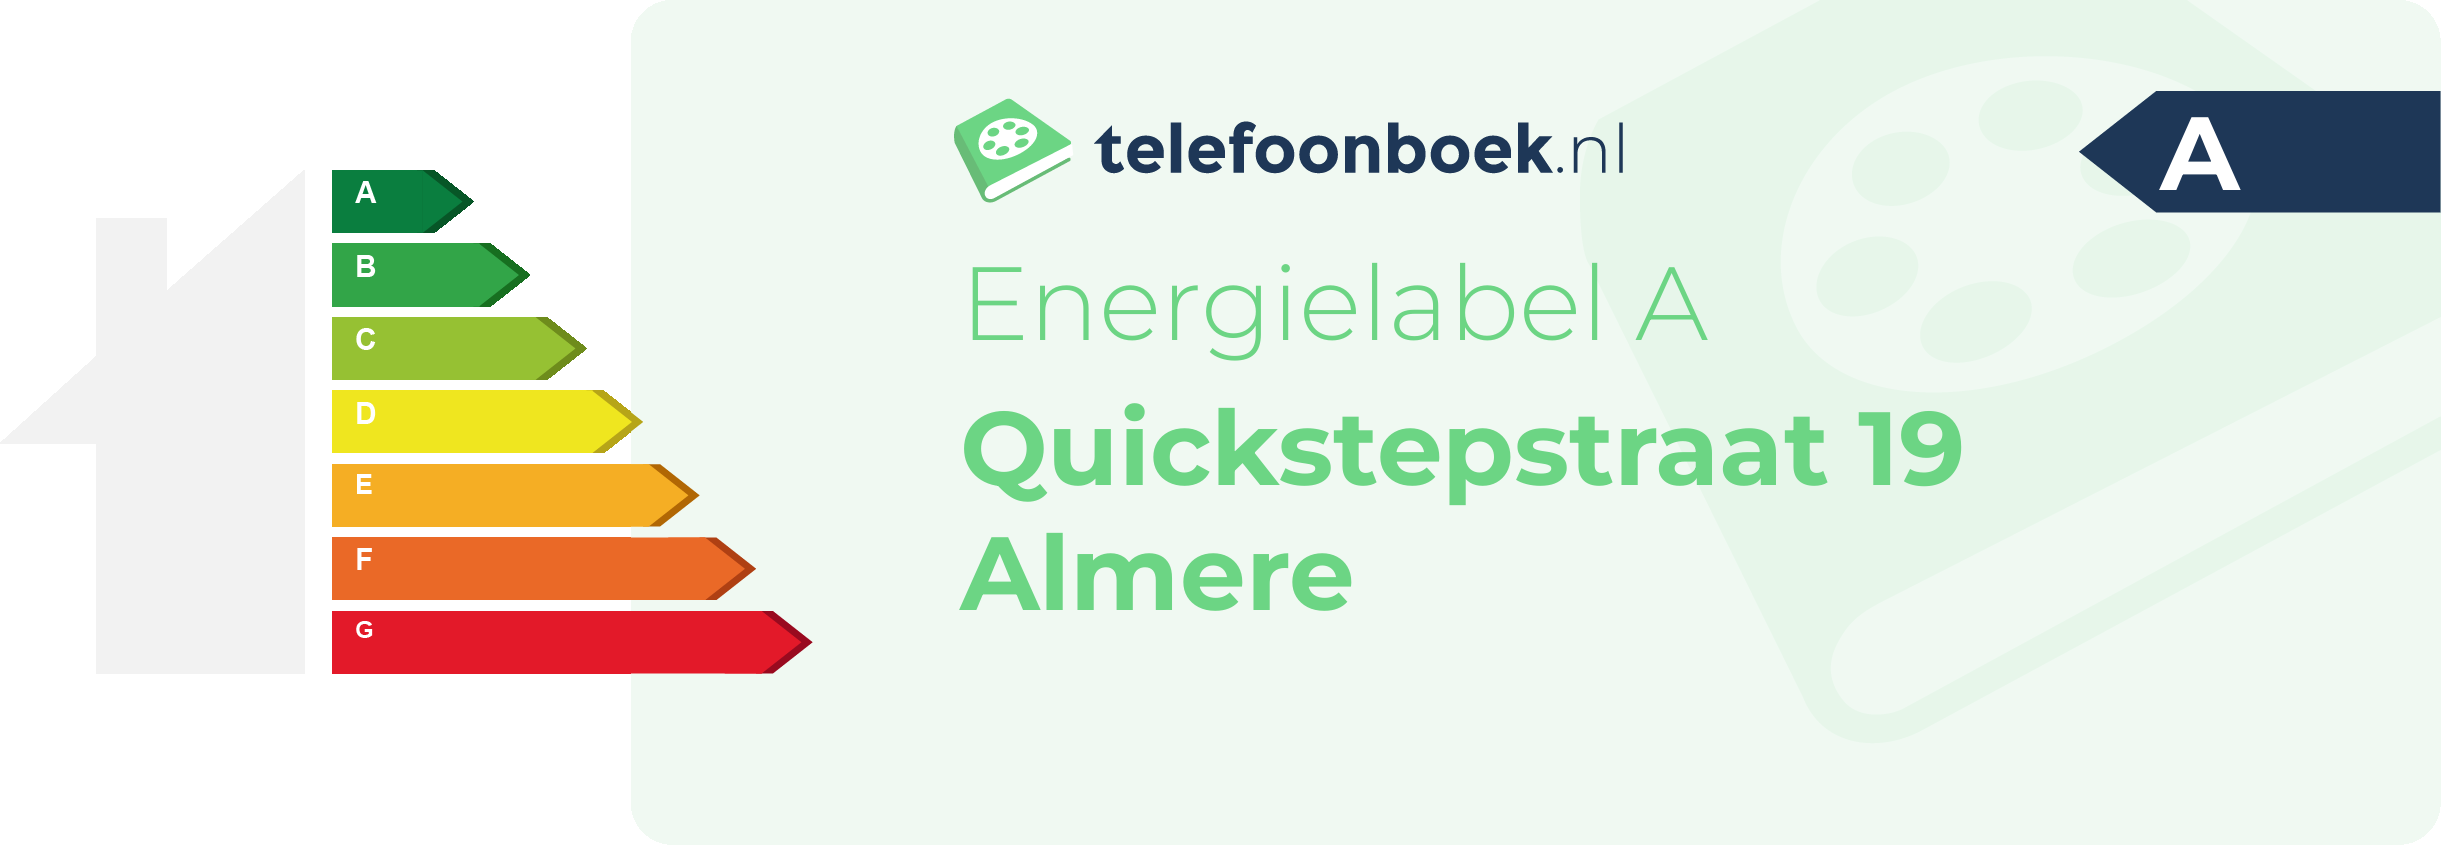 Energielabel Quickstepstraat 19 Almere